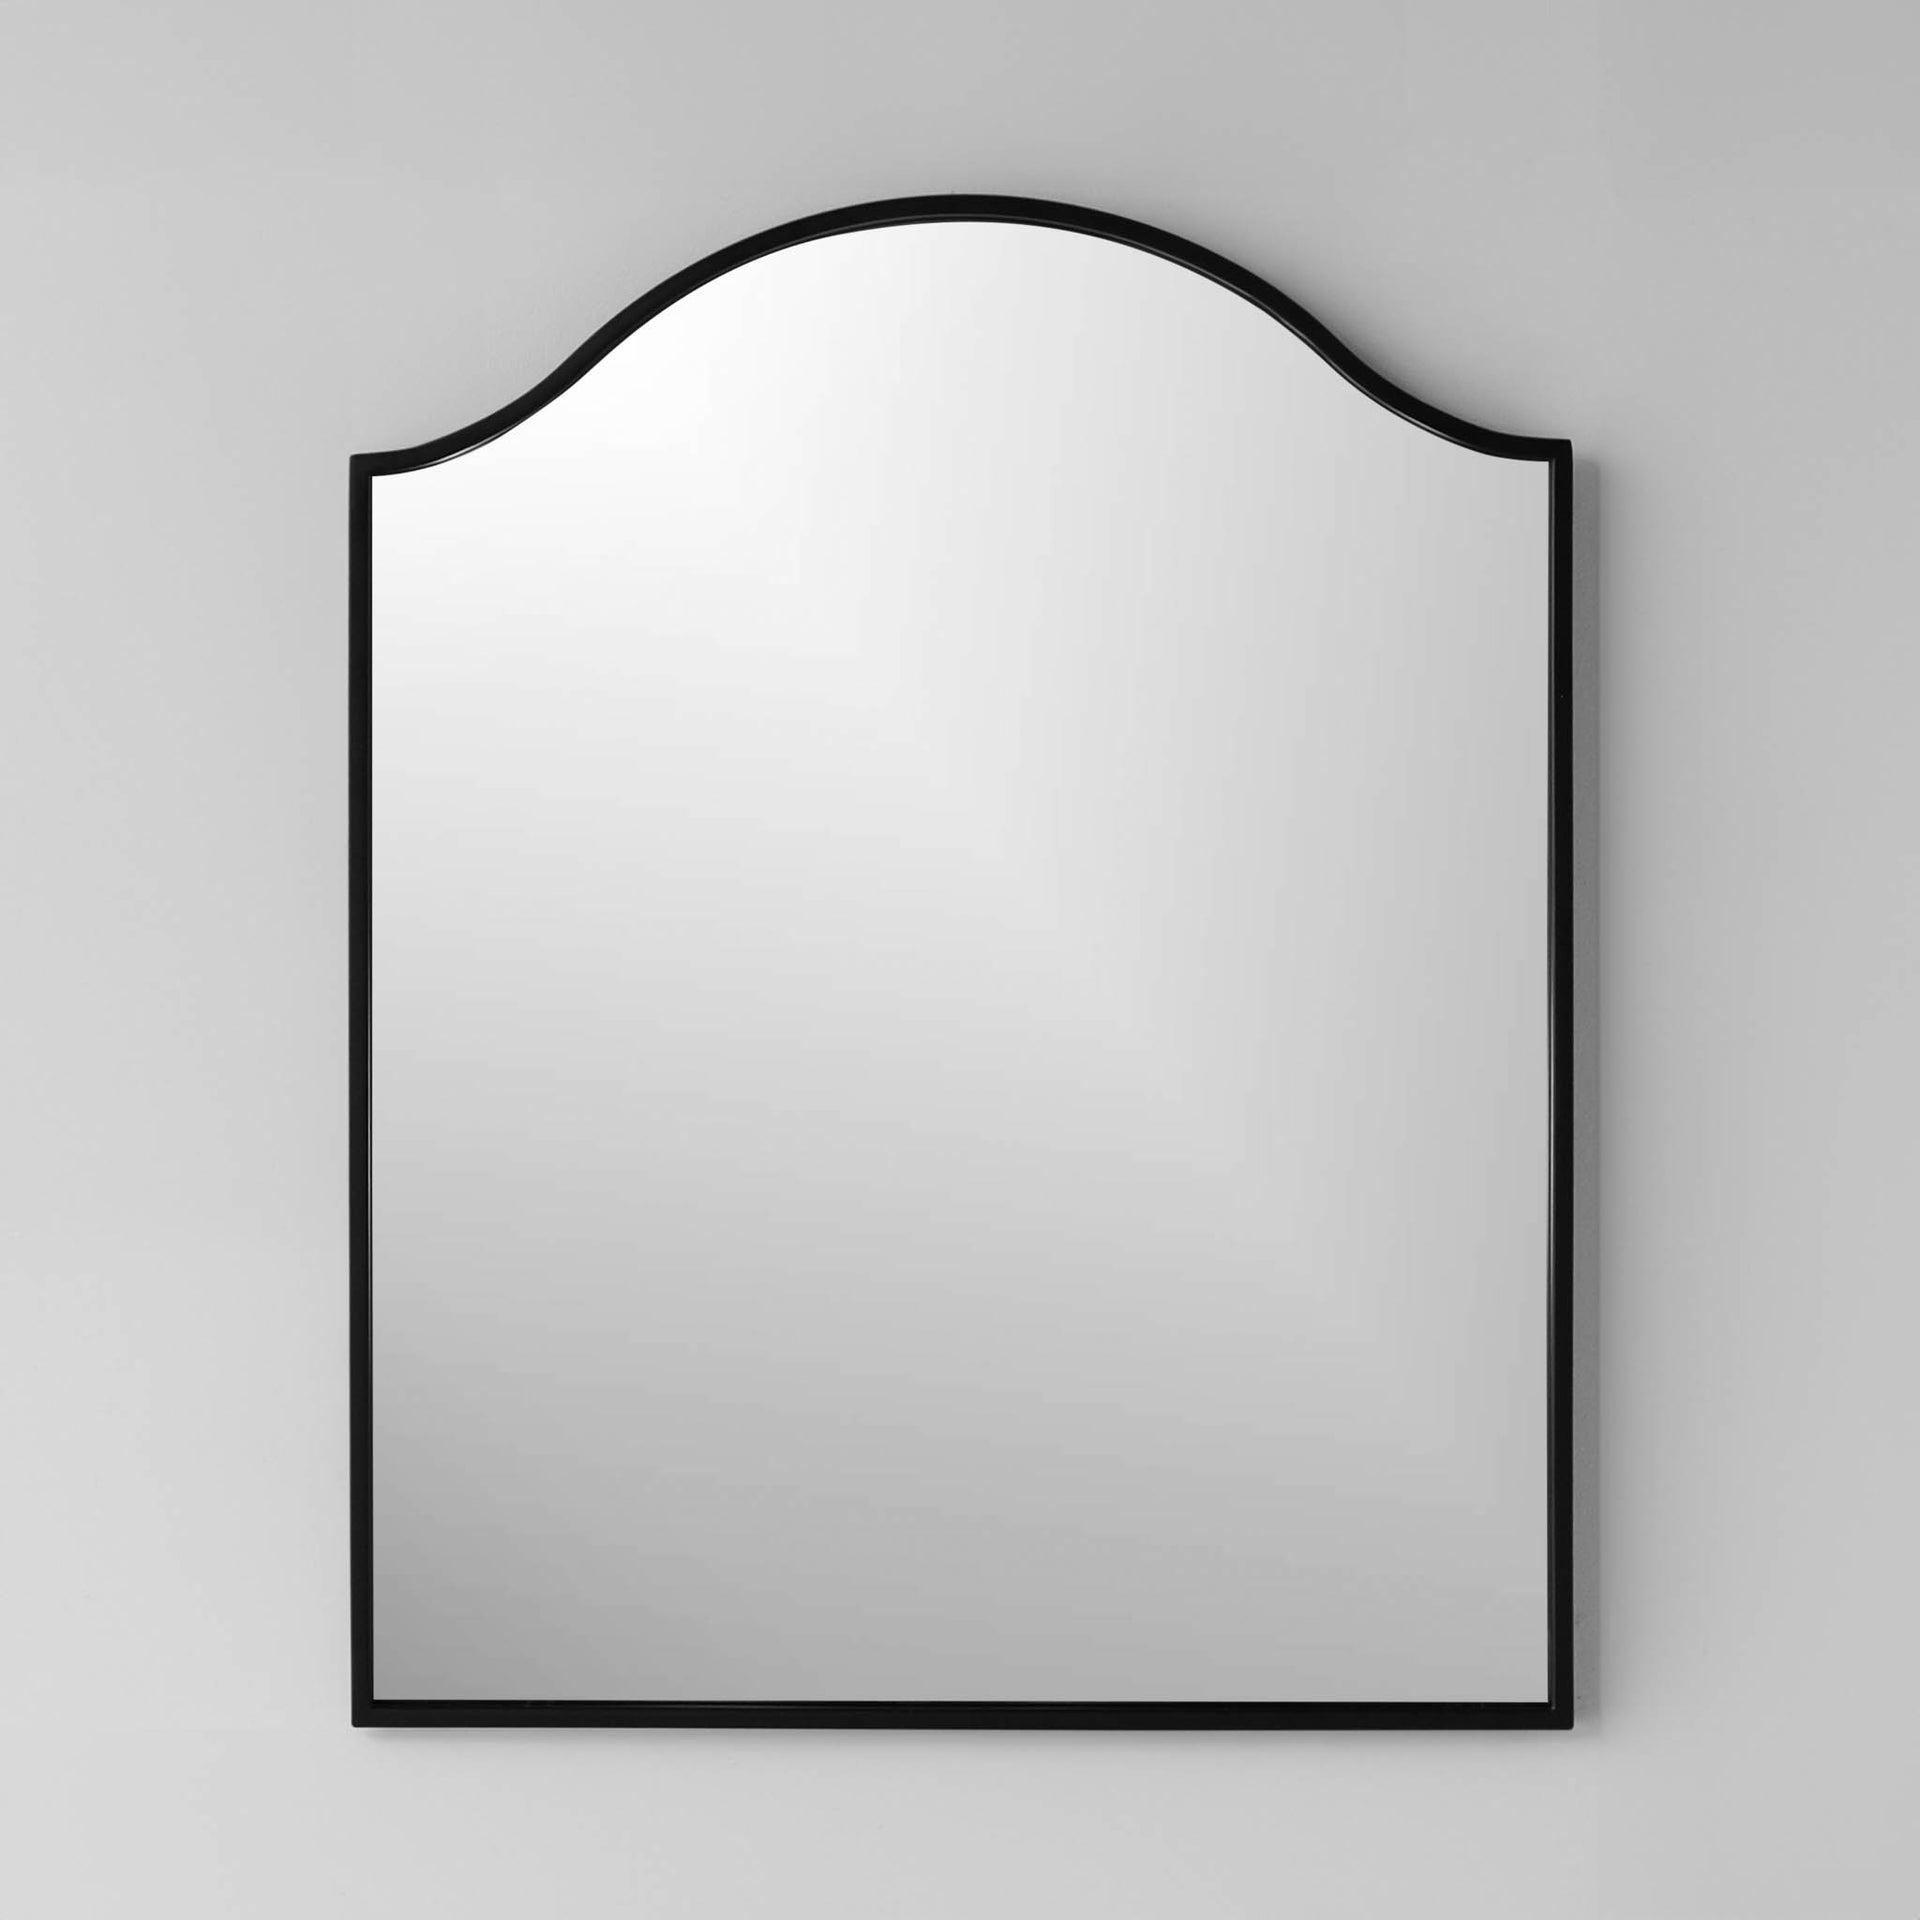 Tudor-inspired mirror: Four-centered arch design